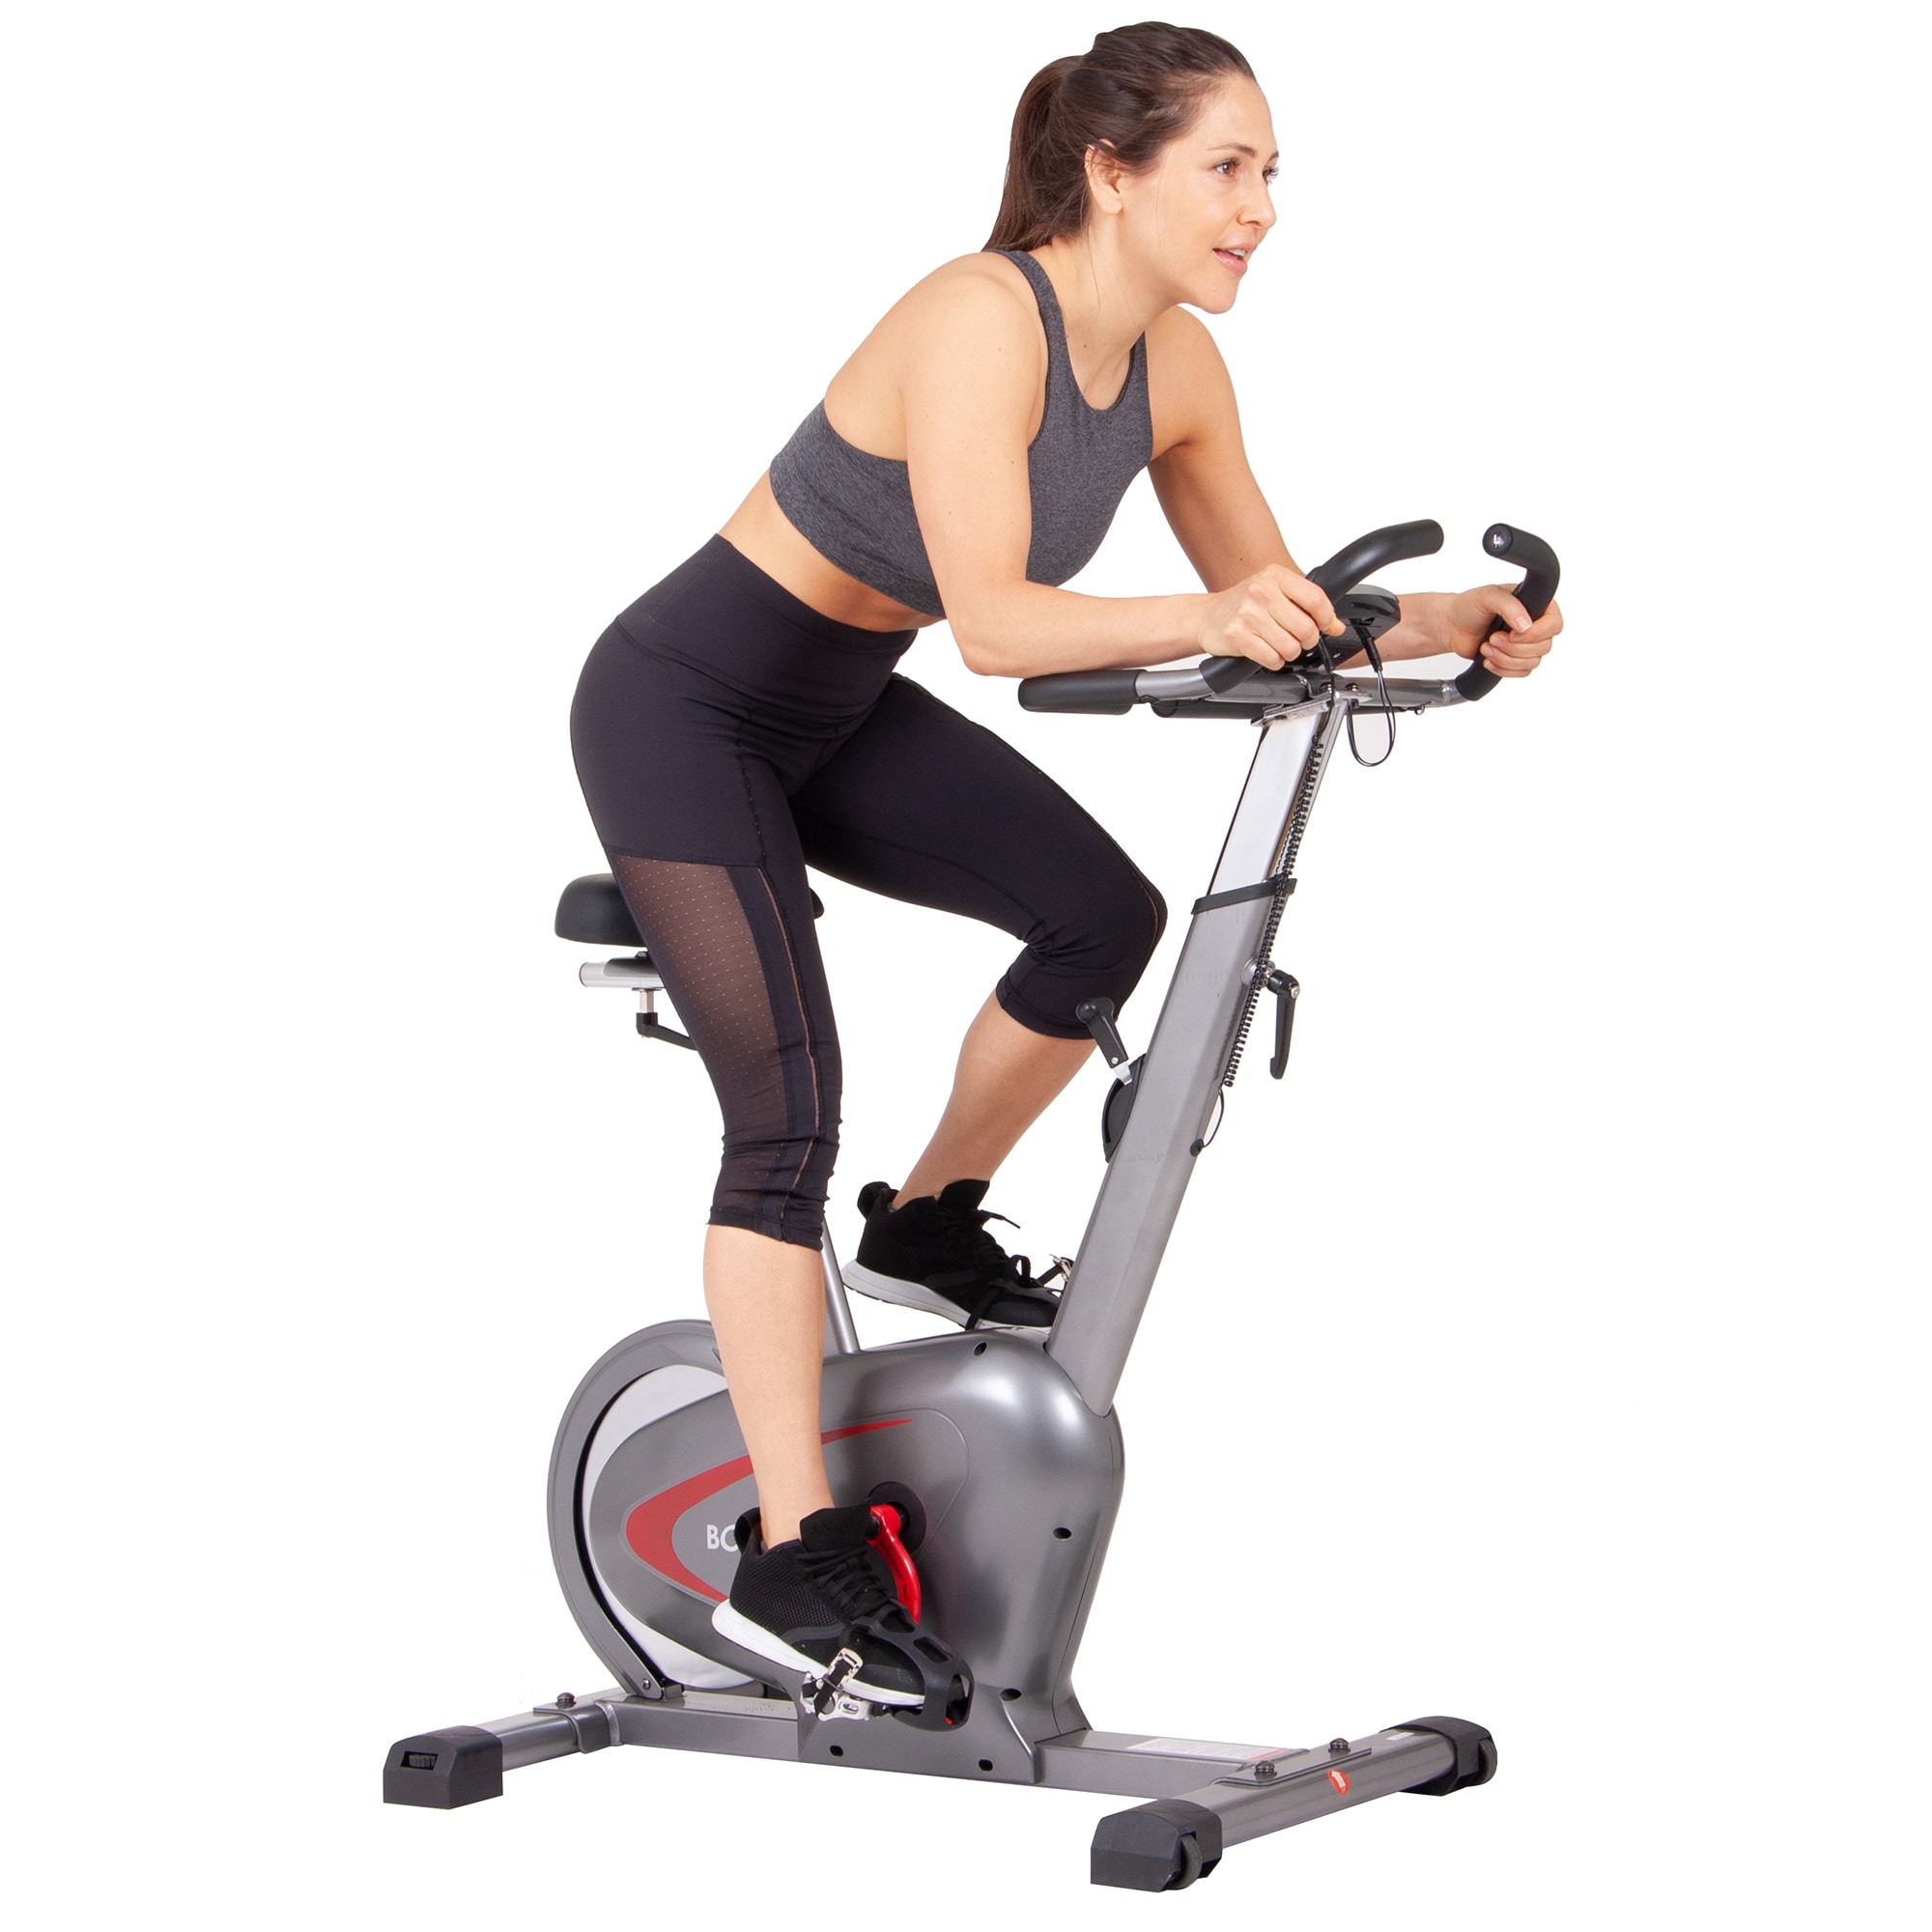 Body Flex Sports Body Power Magnetic Spin Exercise Bike